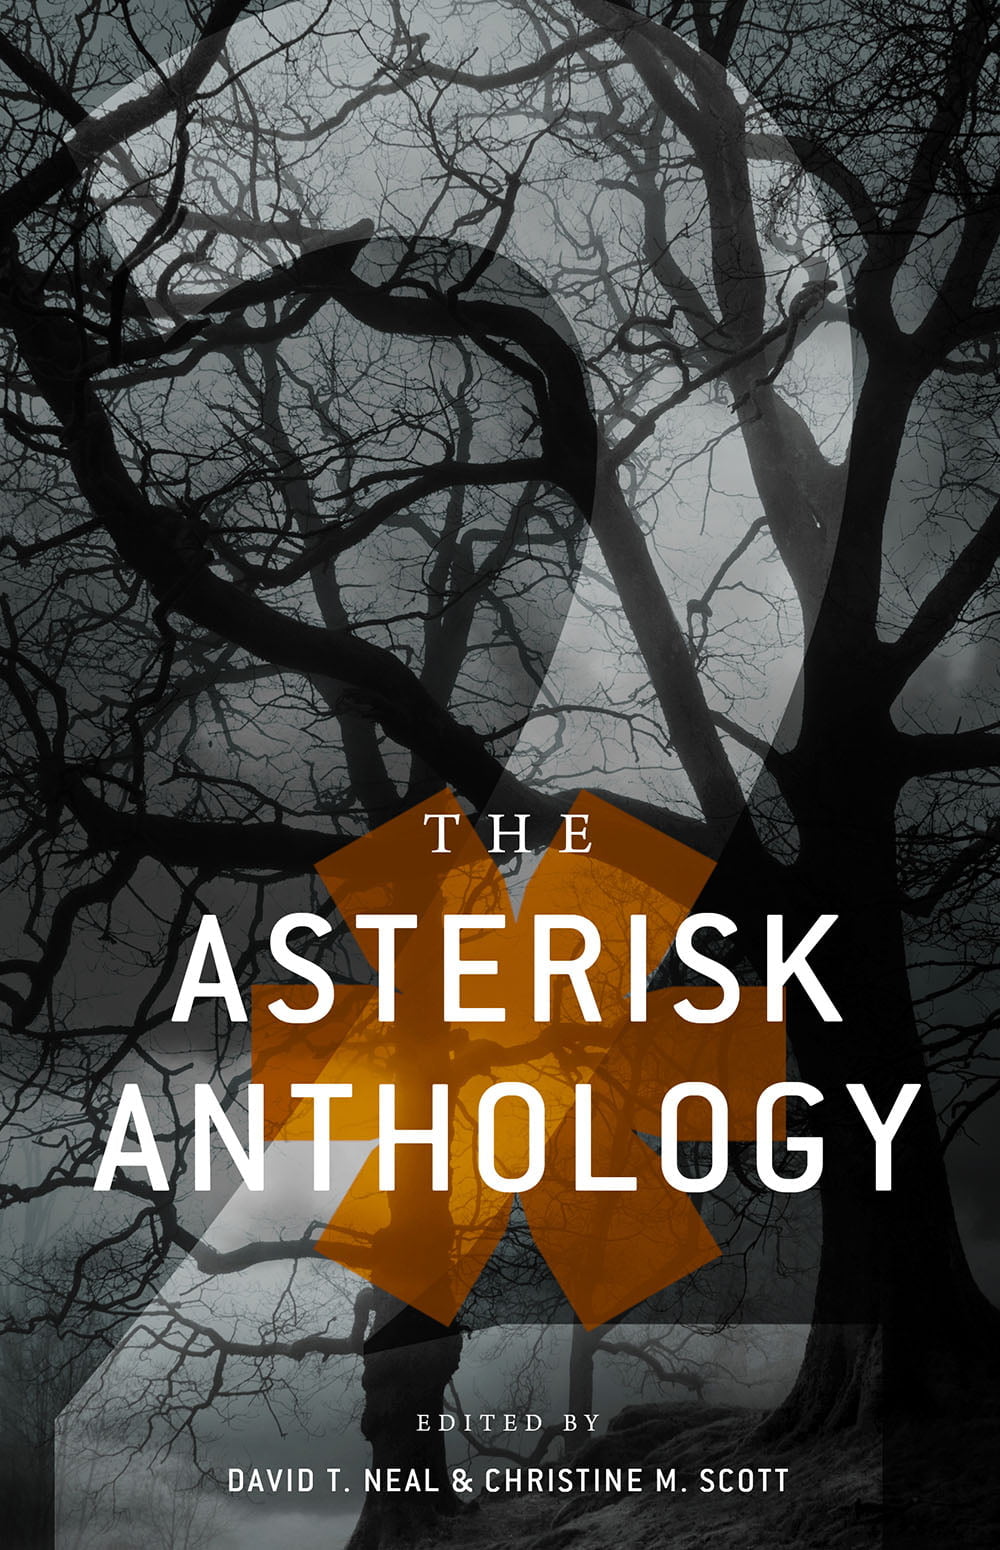 The Asterisk Anthology: Volume 2